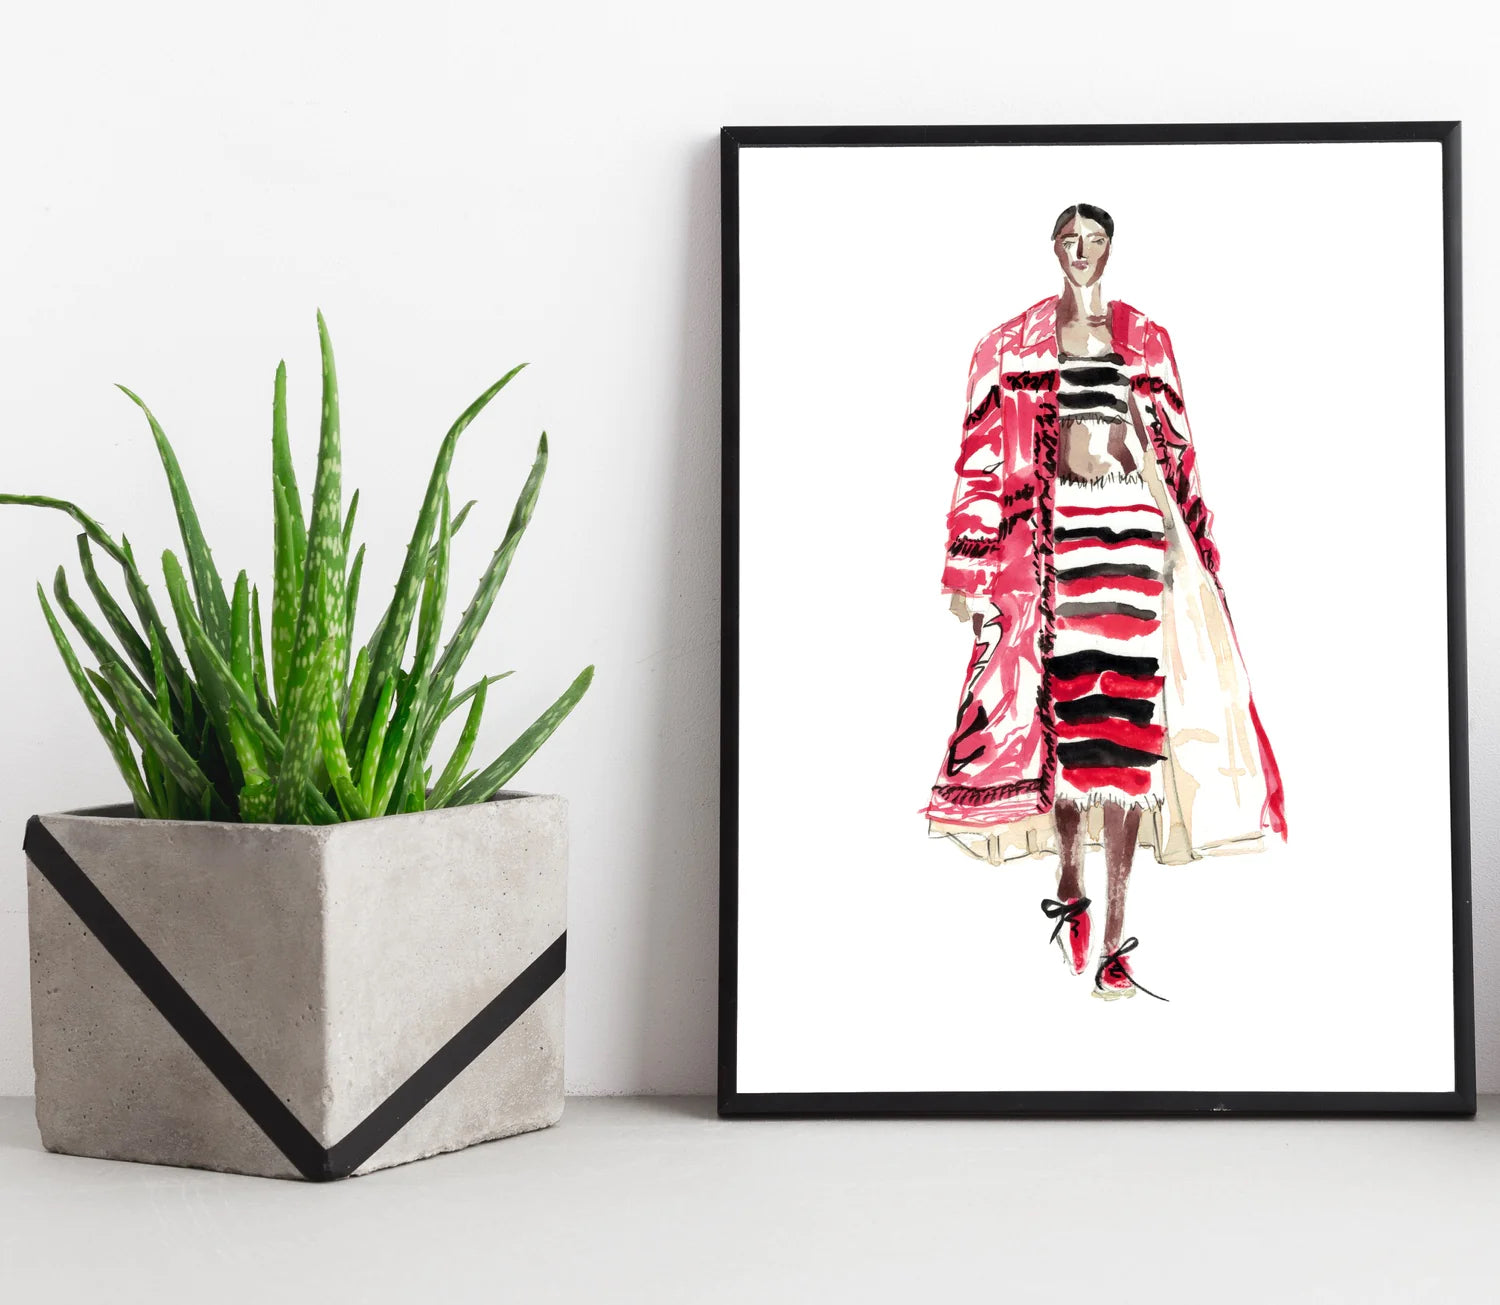 A framed fashion illustration print sits on a ledge next to a plant